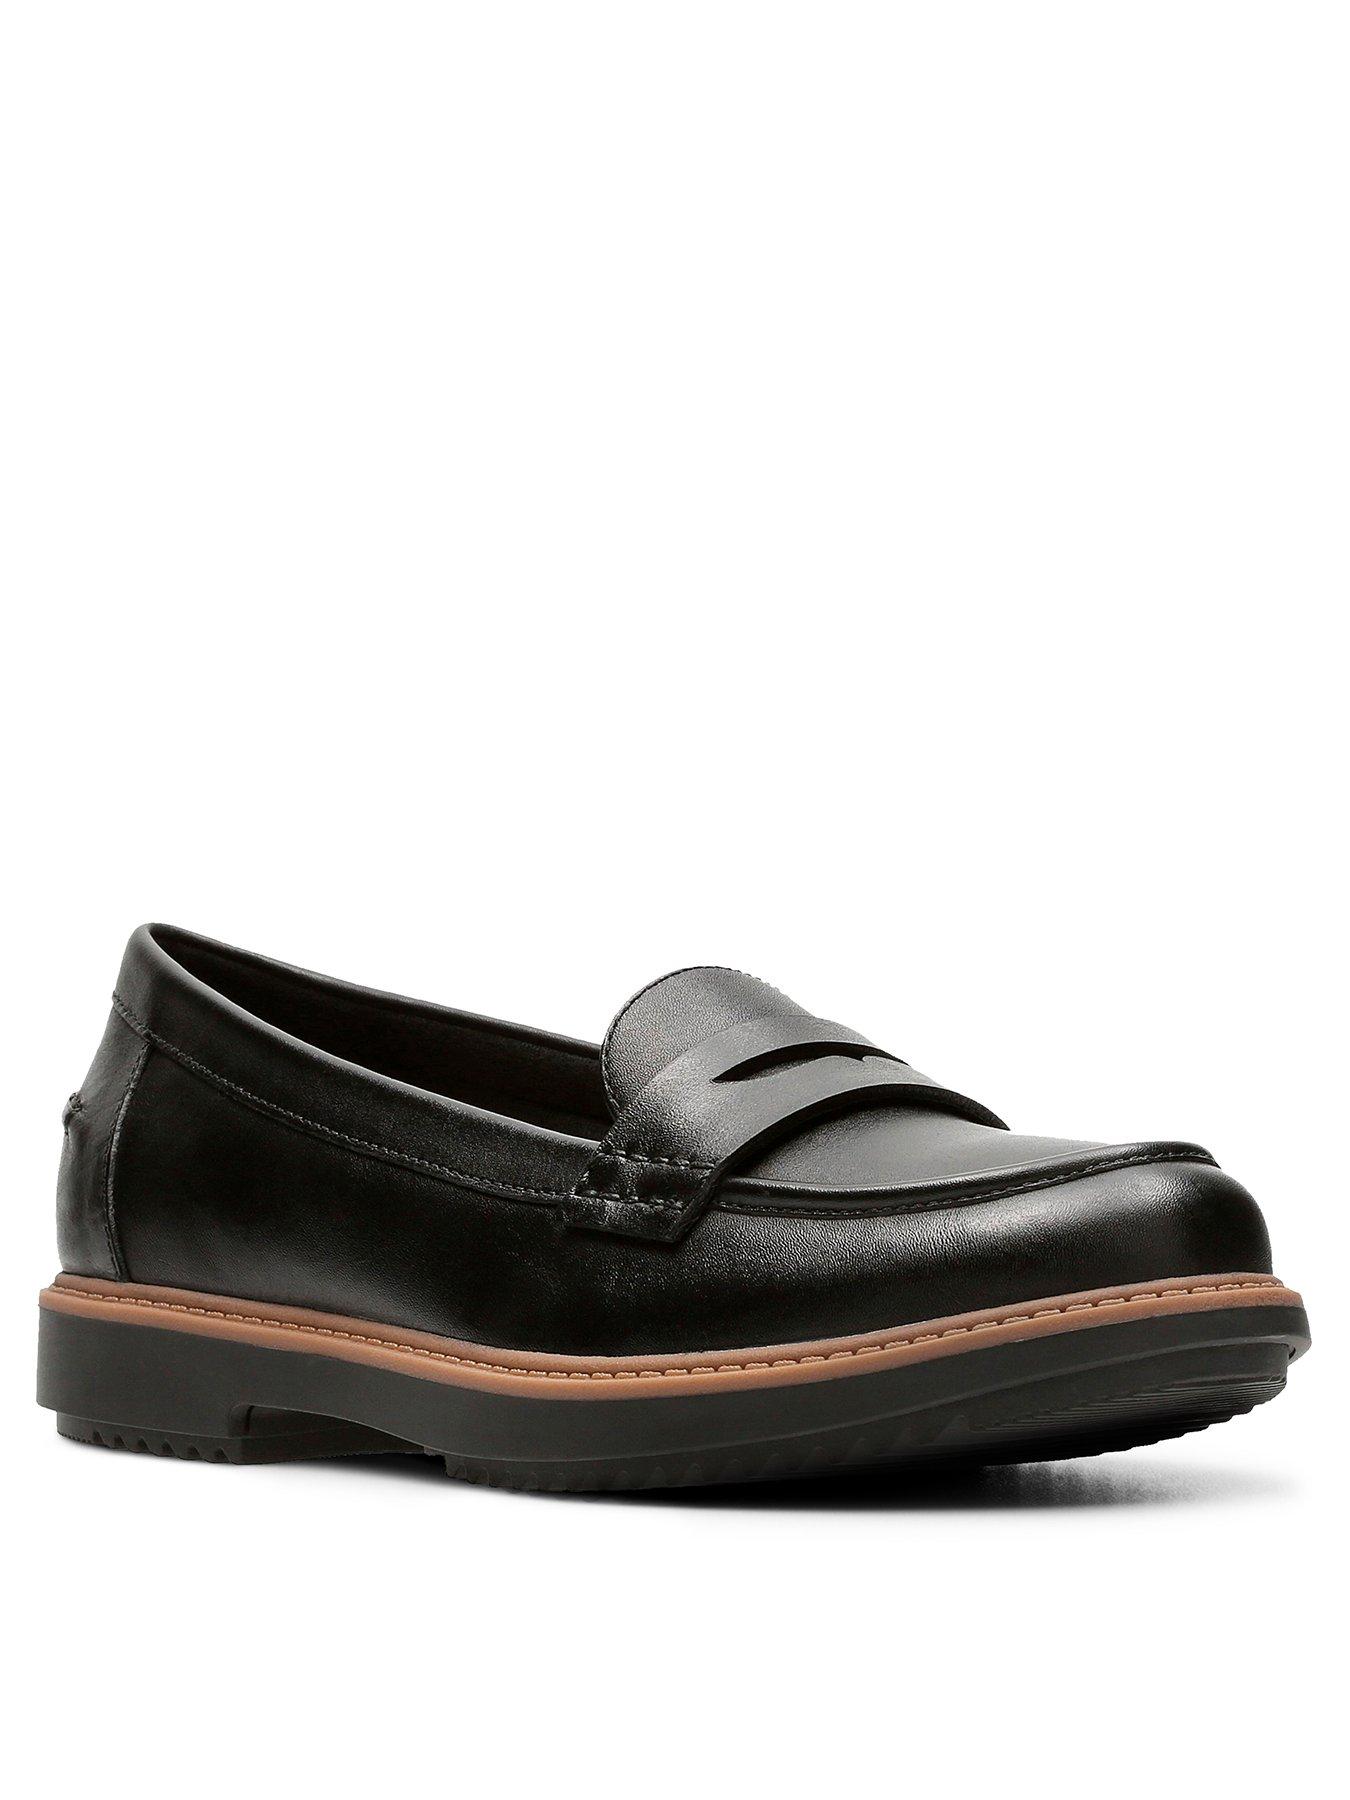 clarks flat black shoes womens